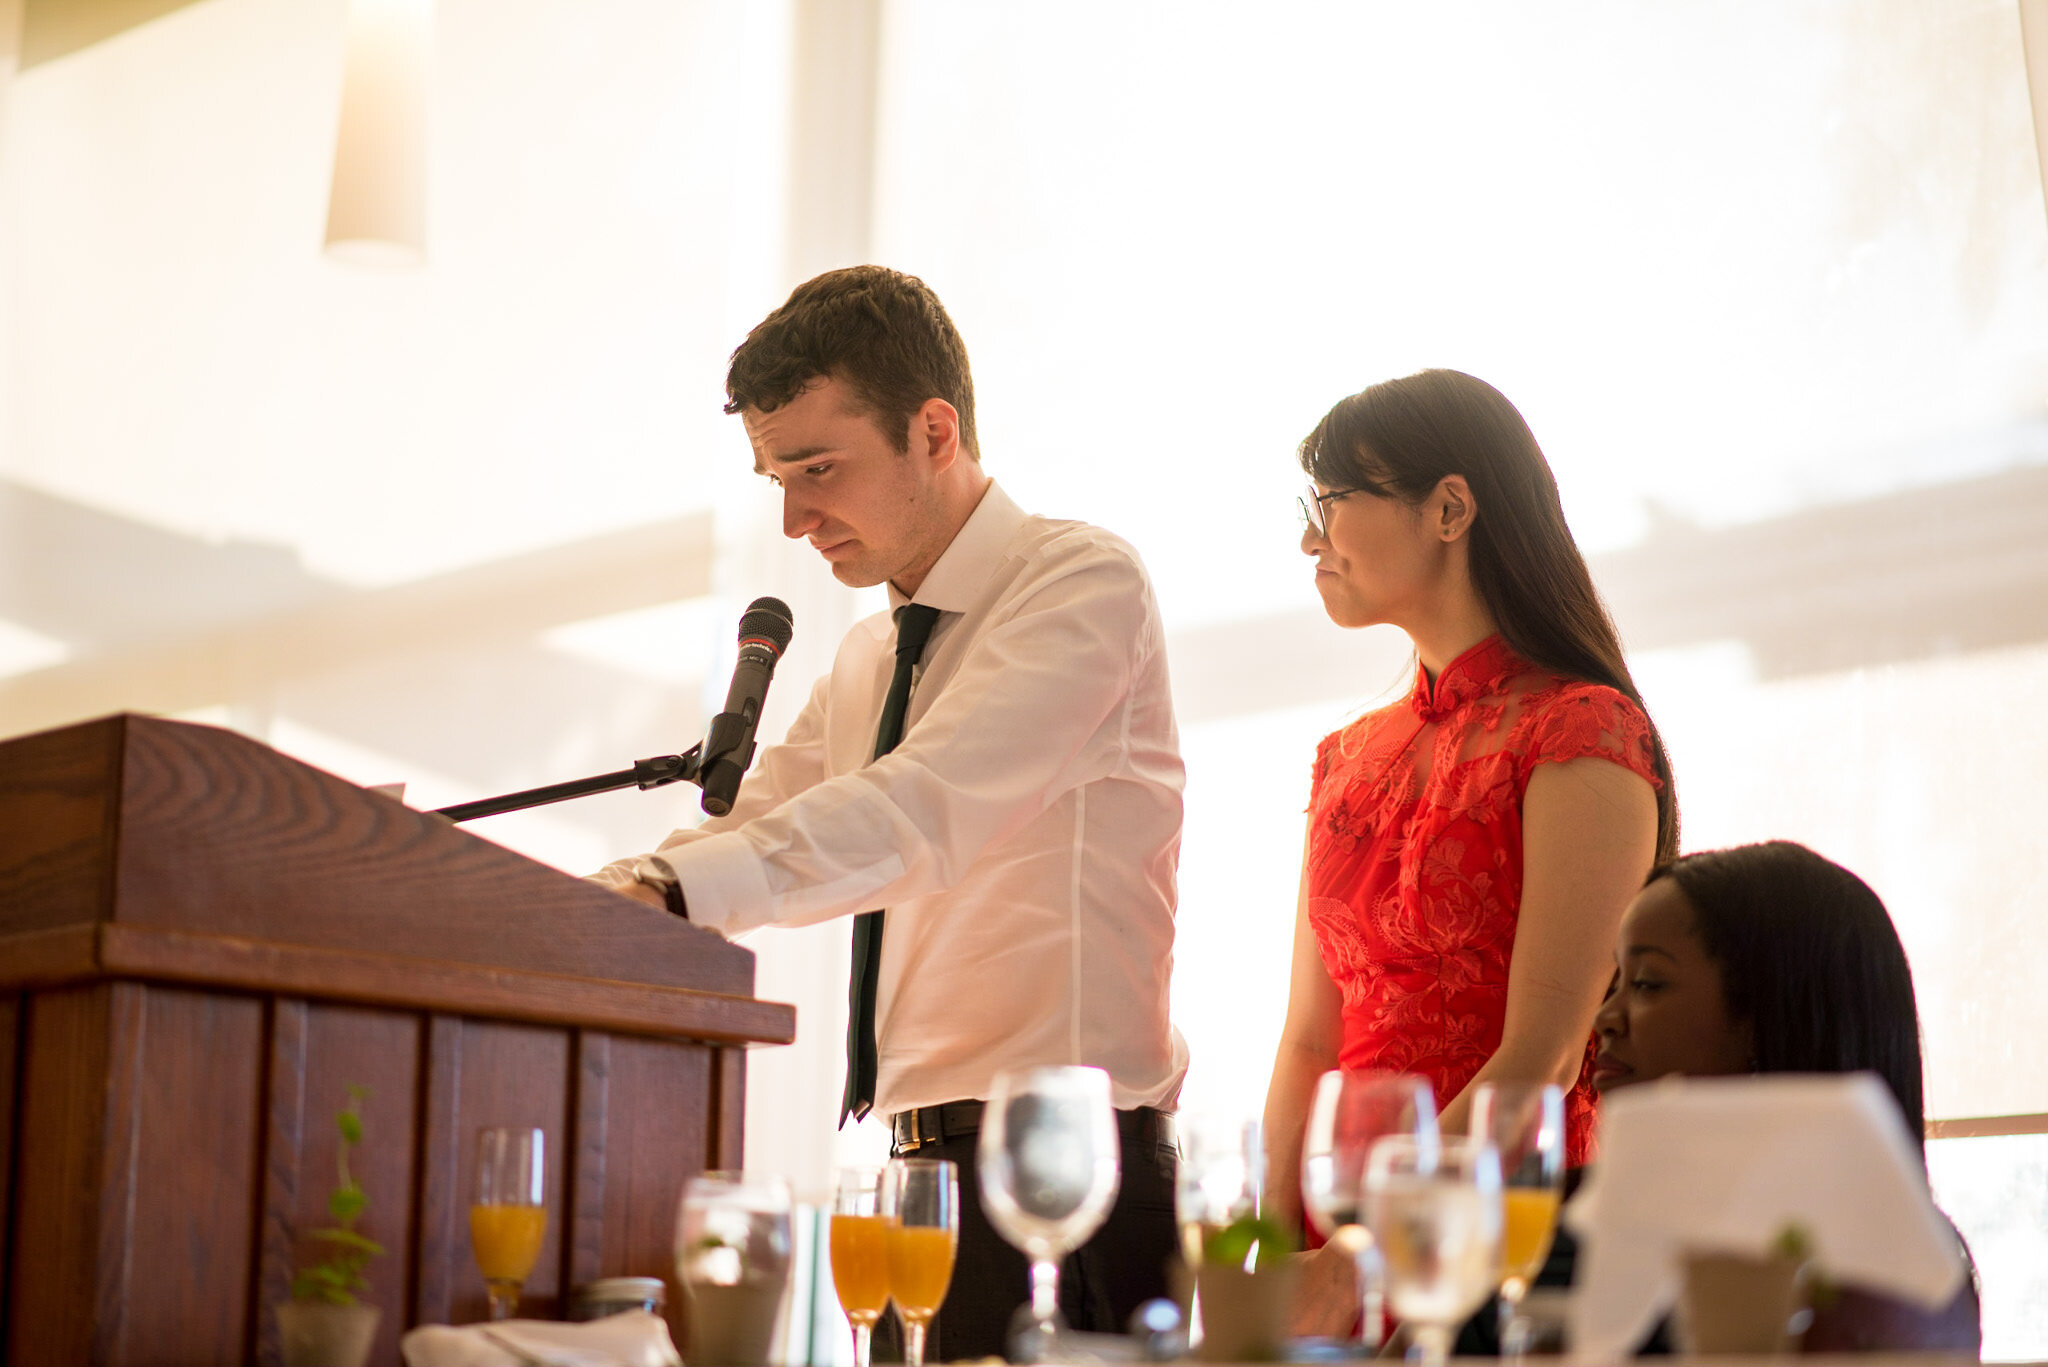 Groom and bride wedding speech at reception